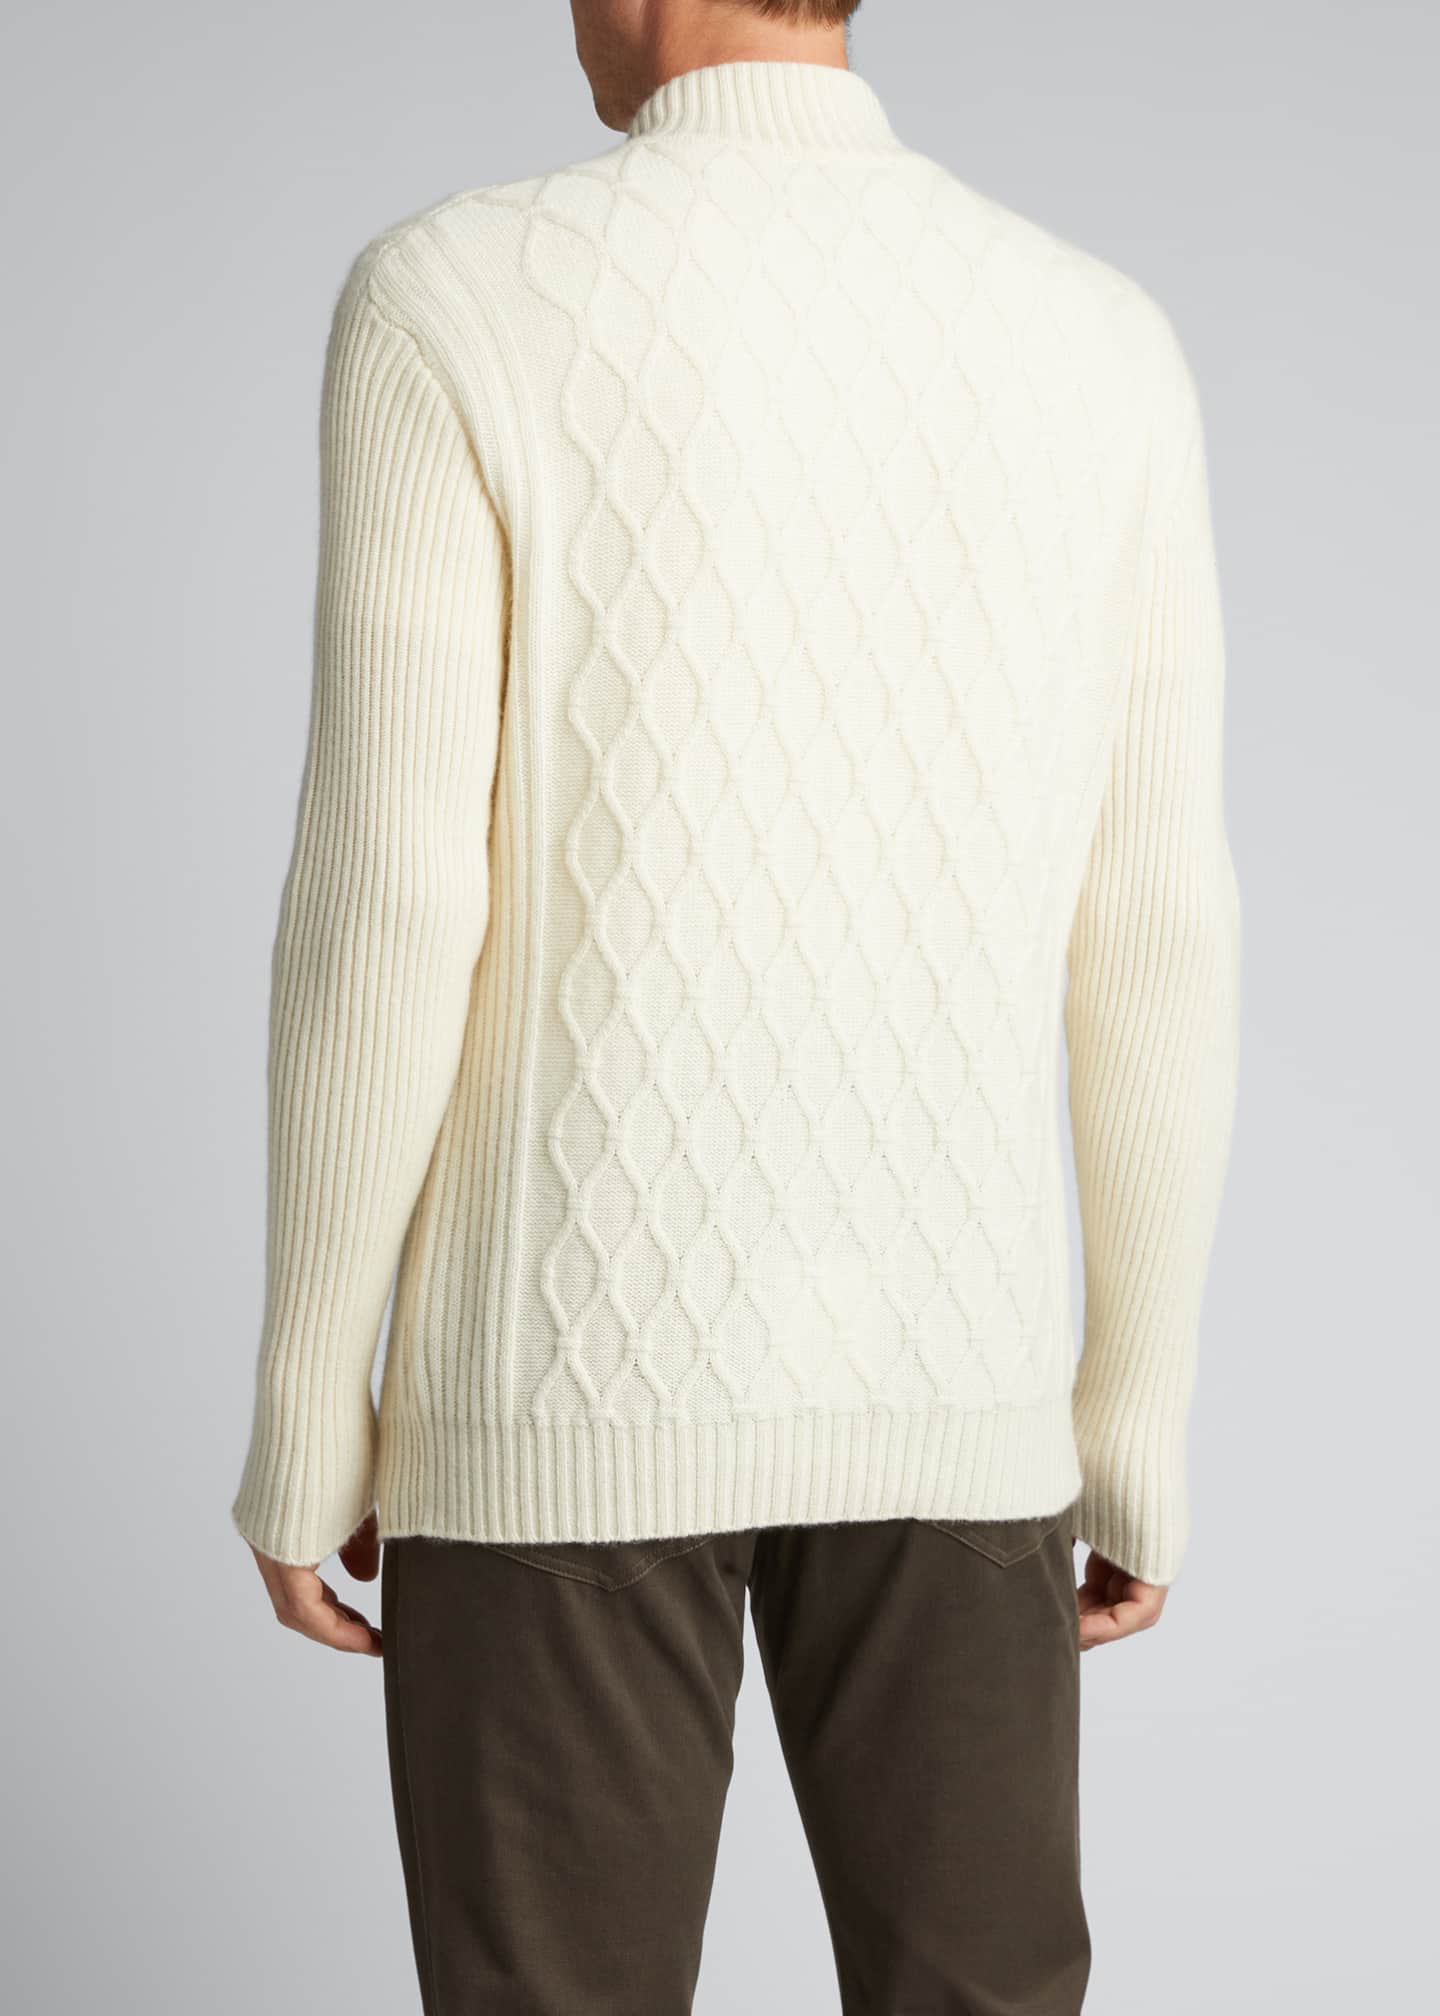 Kiton Men's Quilted Cashmere Quarter-Zip Sweater - Bergdorf Goodman